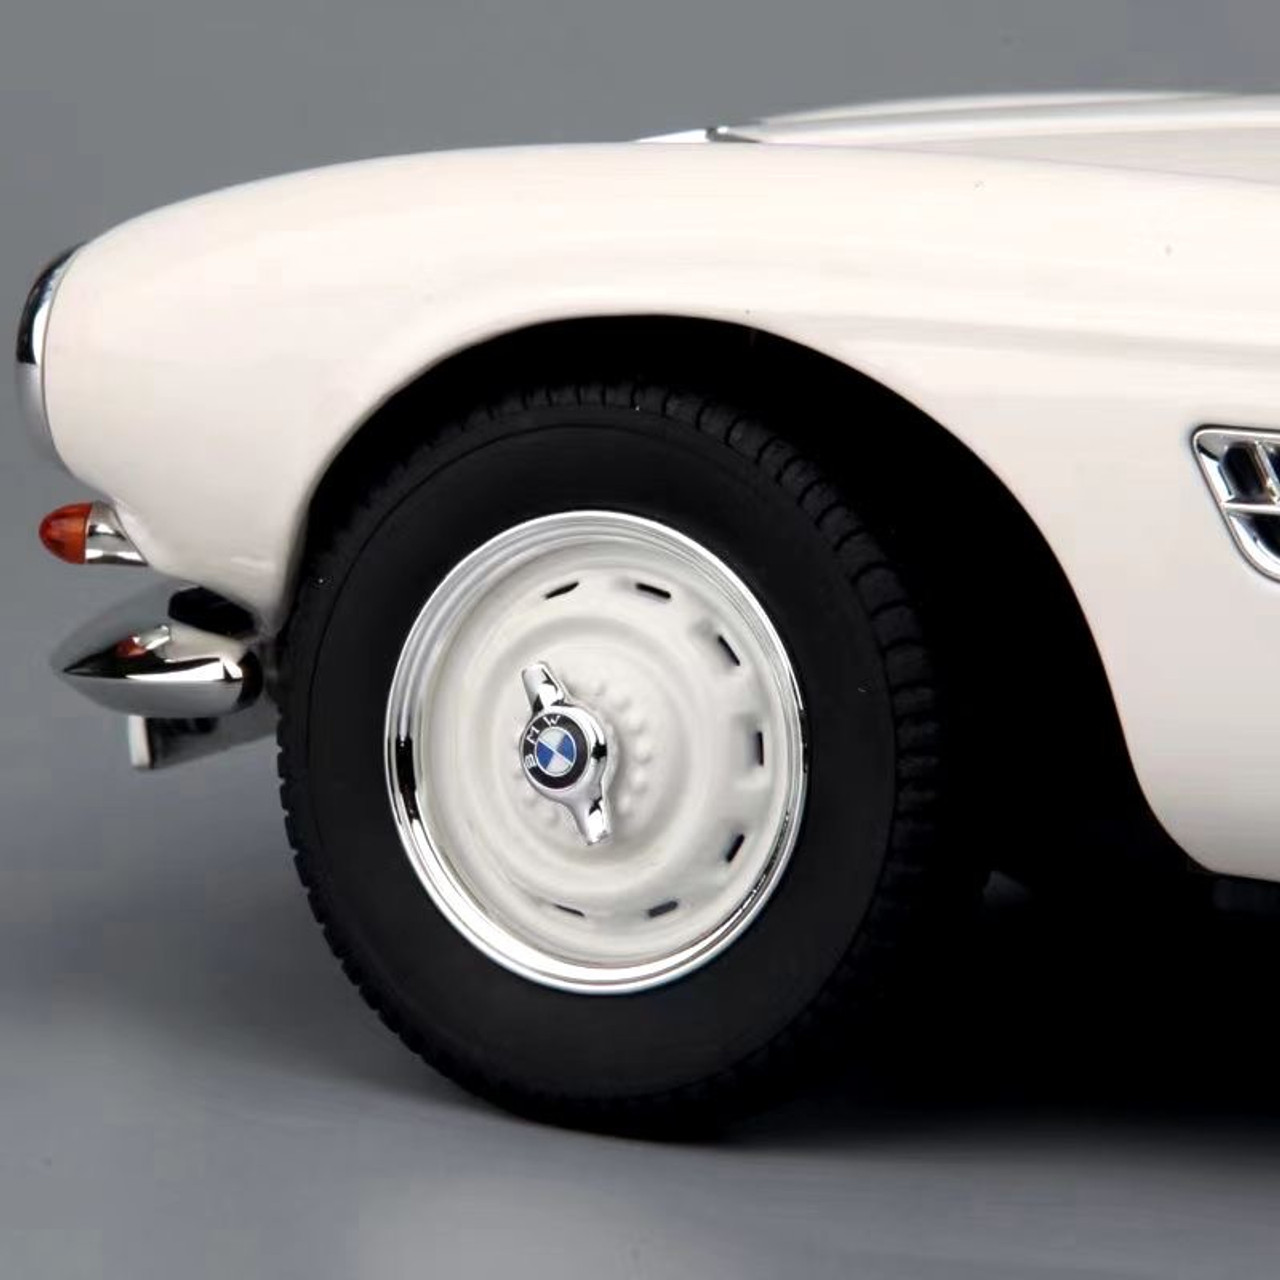 1/18 Norev 1957 BMW 507 Cabriolet (White) Diecast Car Model